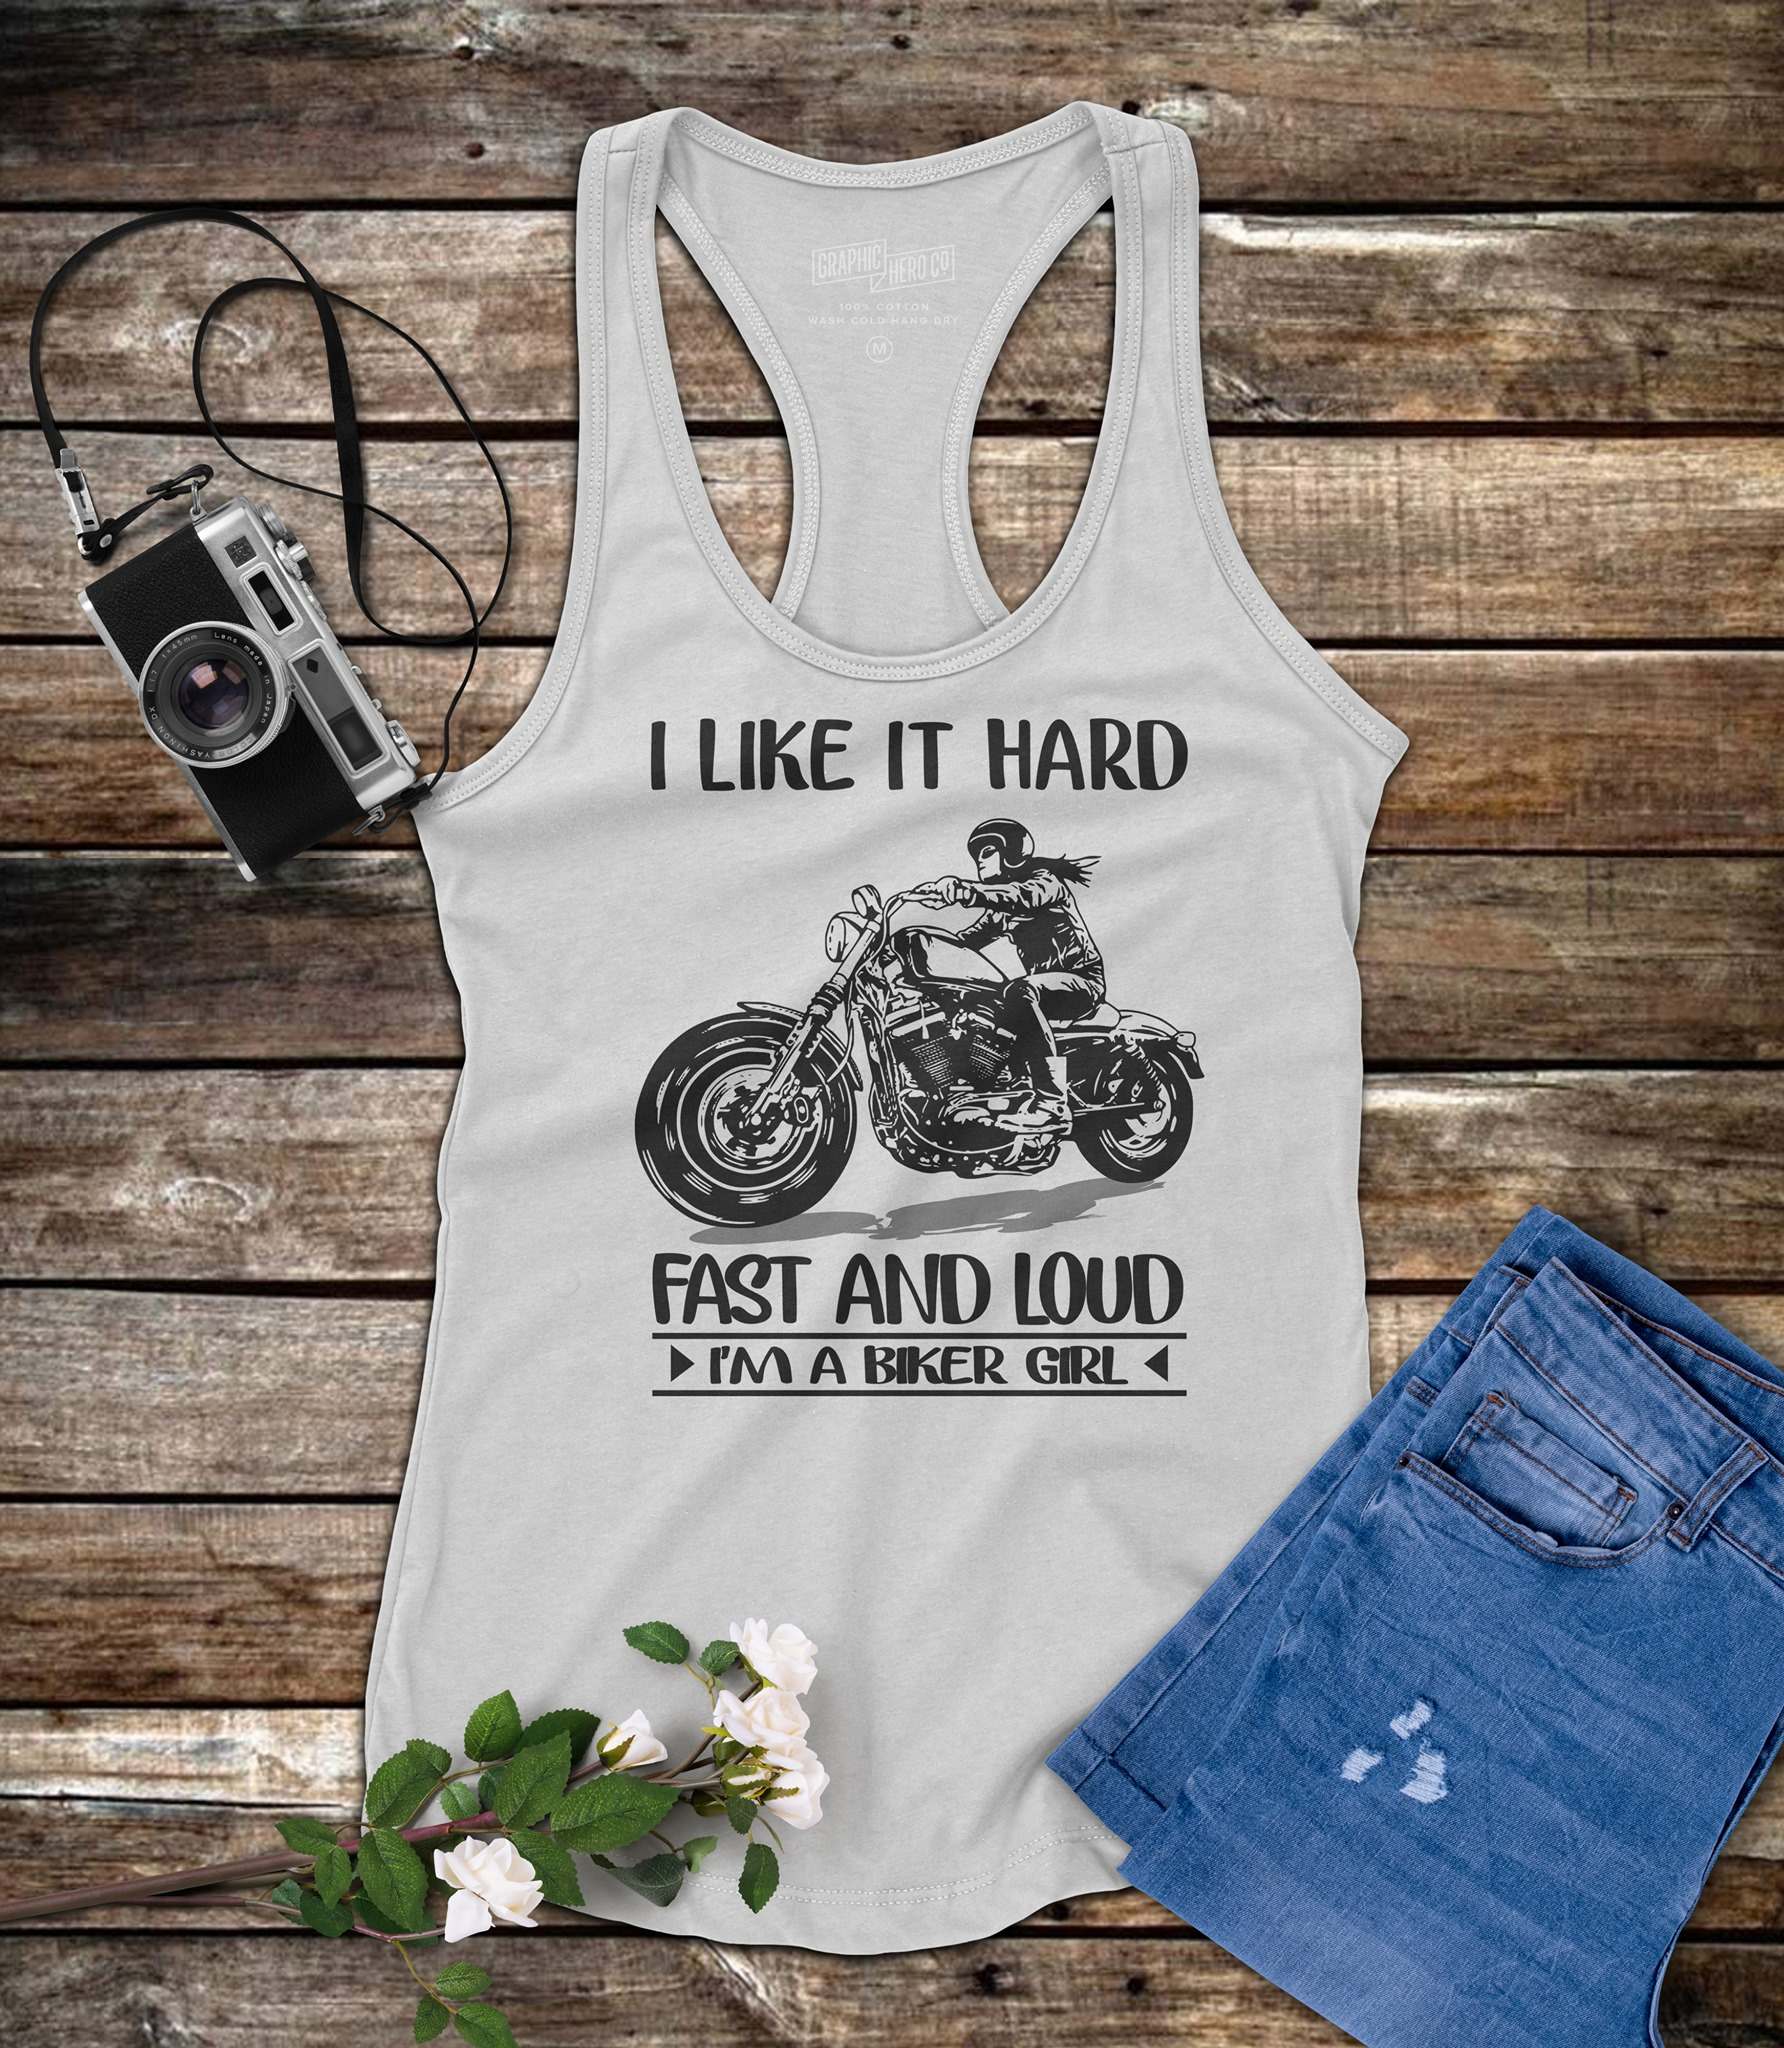 I like it hard fast and loud I'm a biker girl - Girl love motorcycle